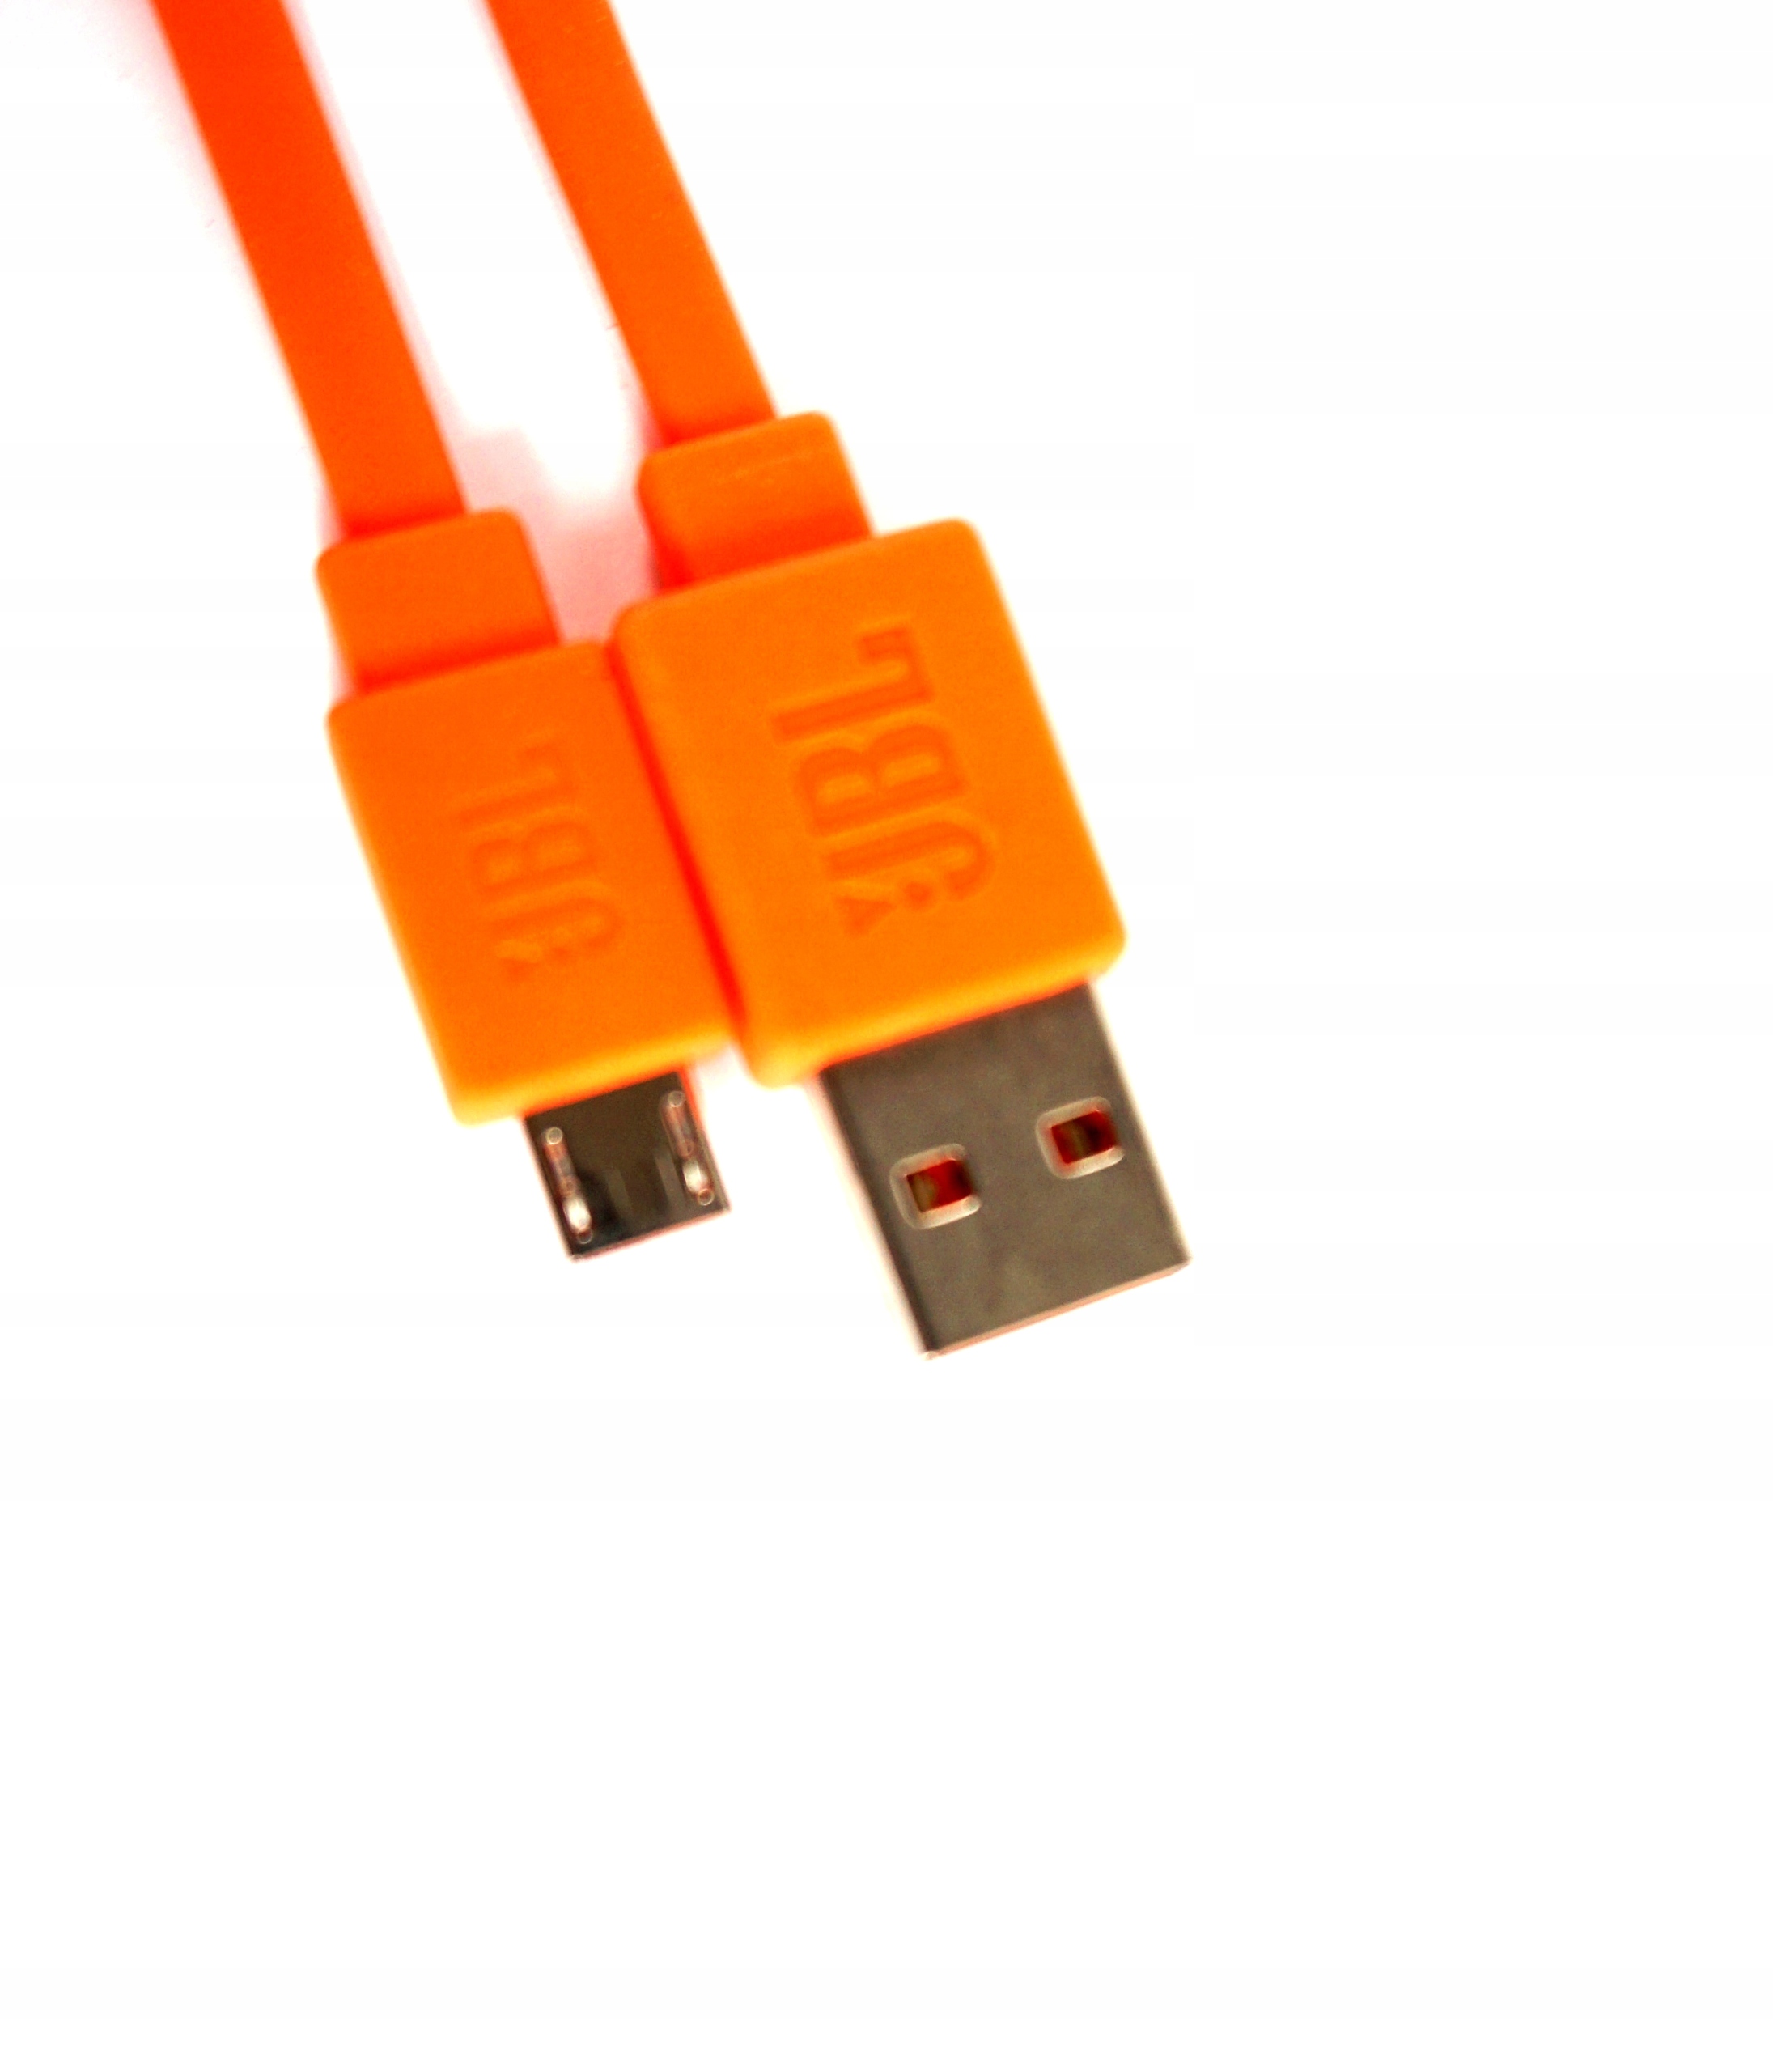 Double cordon micro-USB CAB222 - Cordons micro-USB